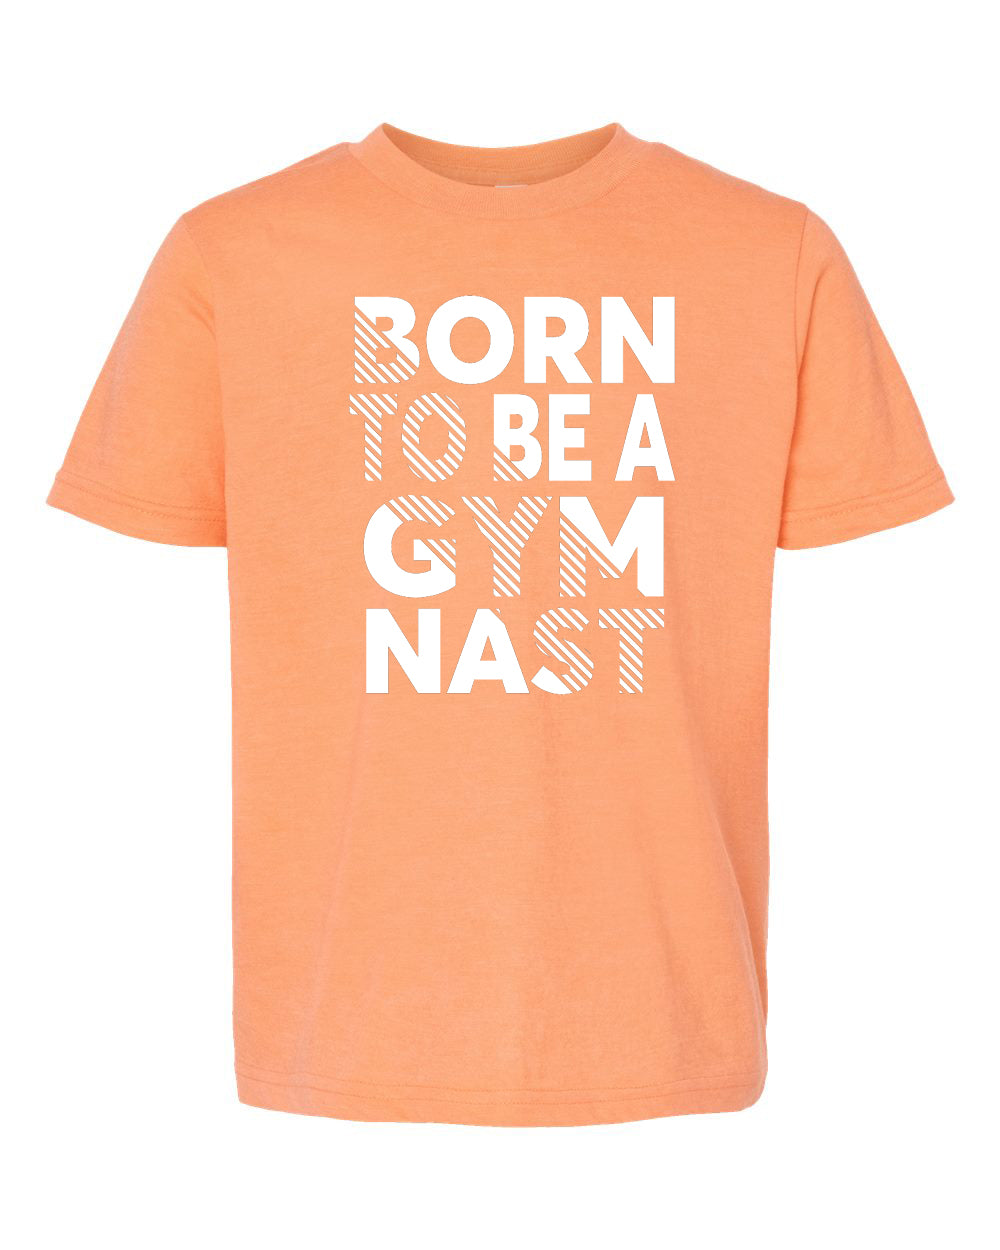 Born To Be A Gymnast Adult T-Shirt Cantaloupe